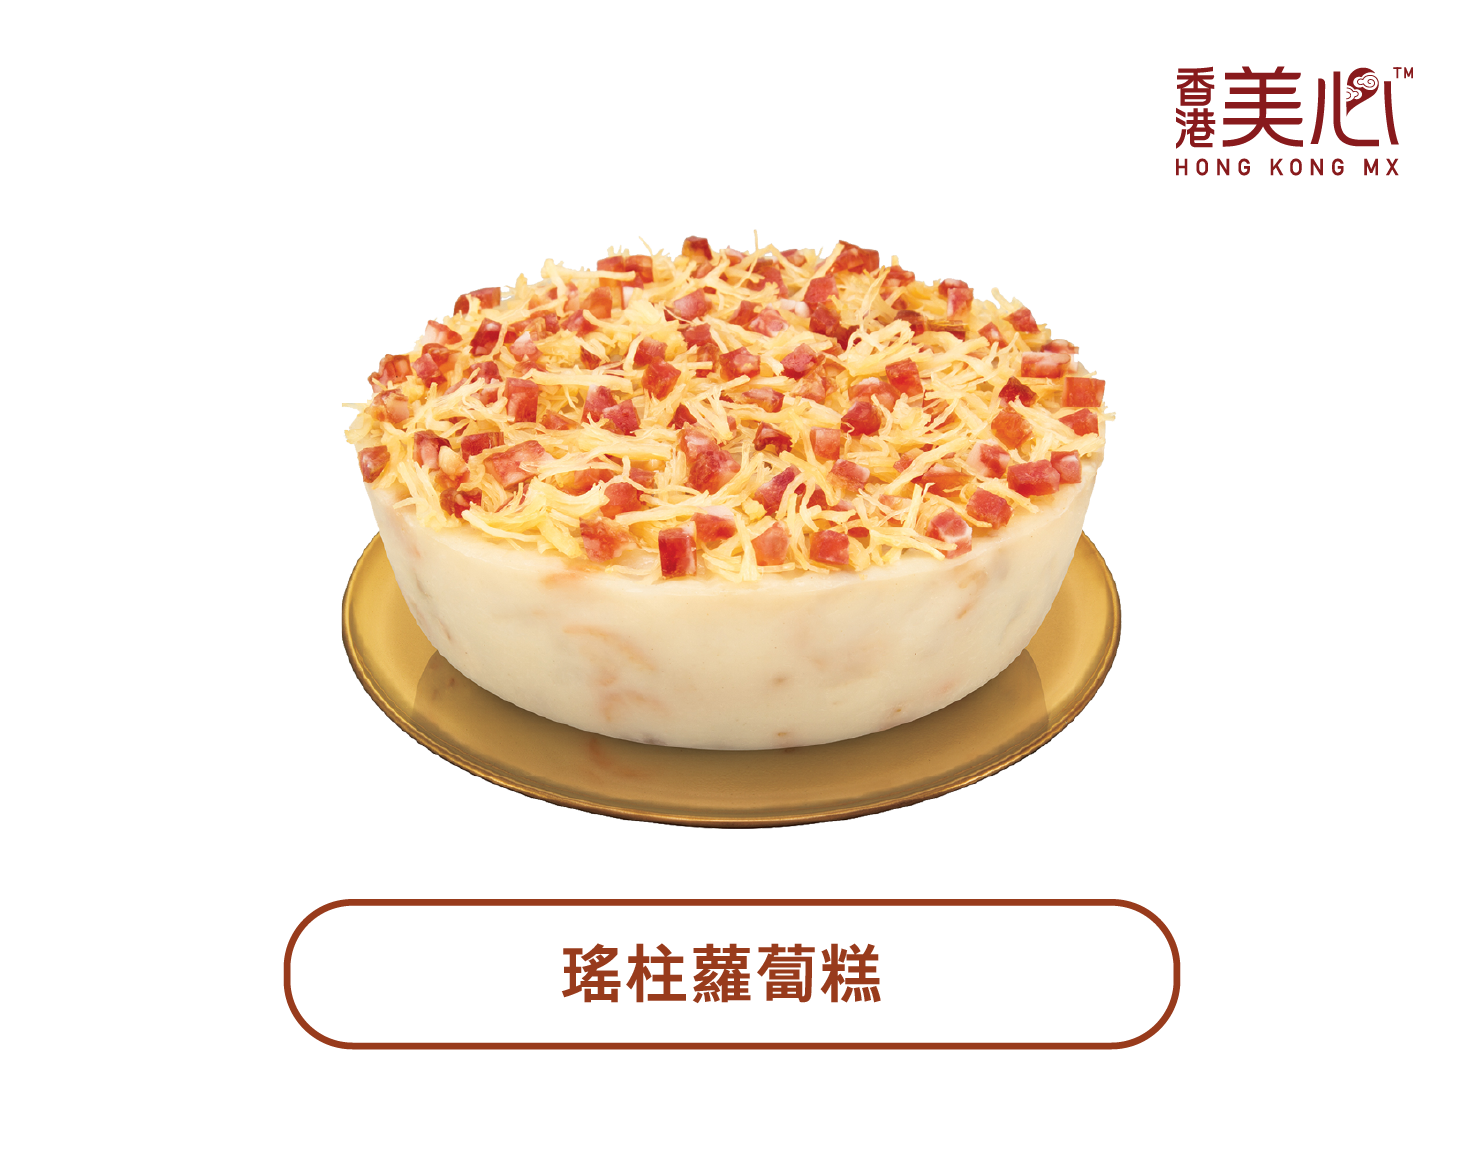 Hong Kong MX | MX Turnip Pudding with Conpoy (Physical Coupon)